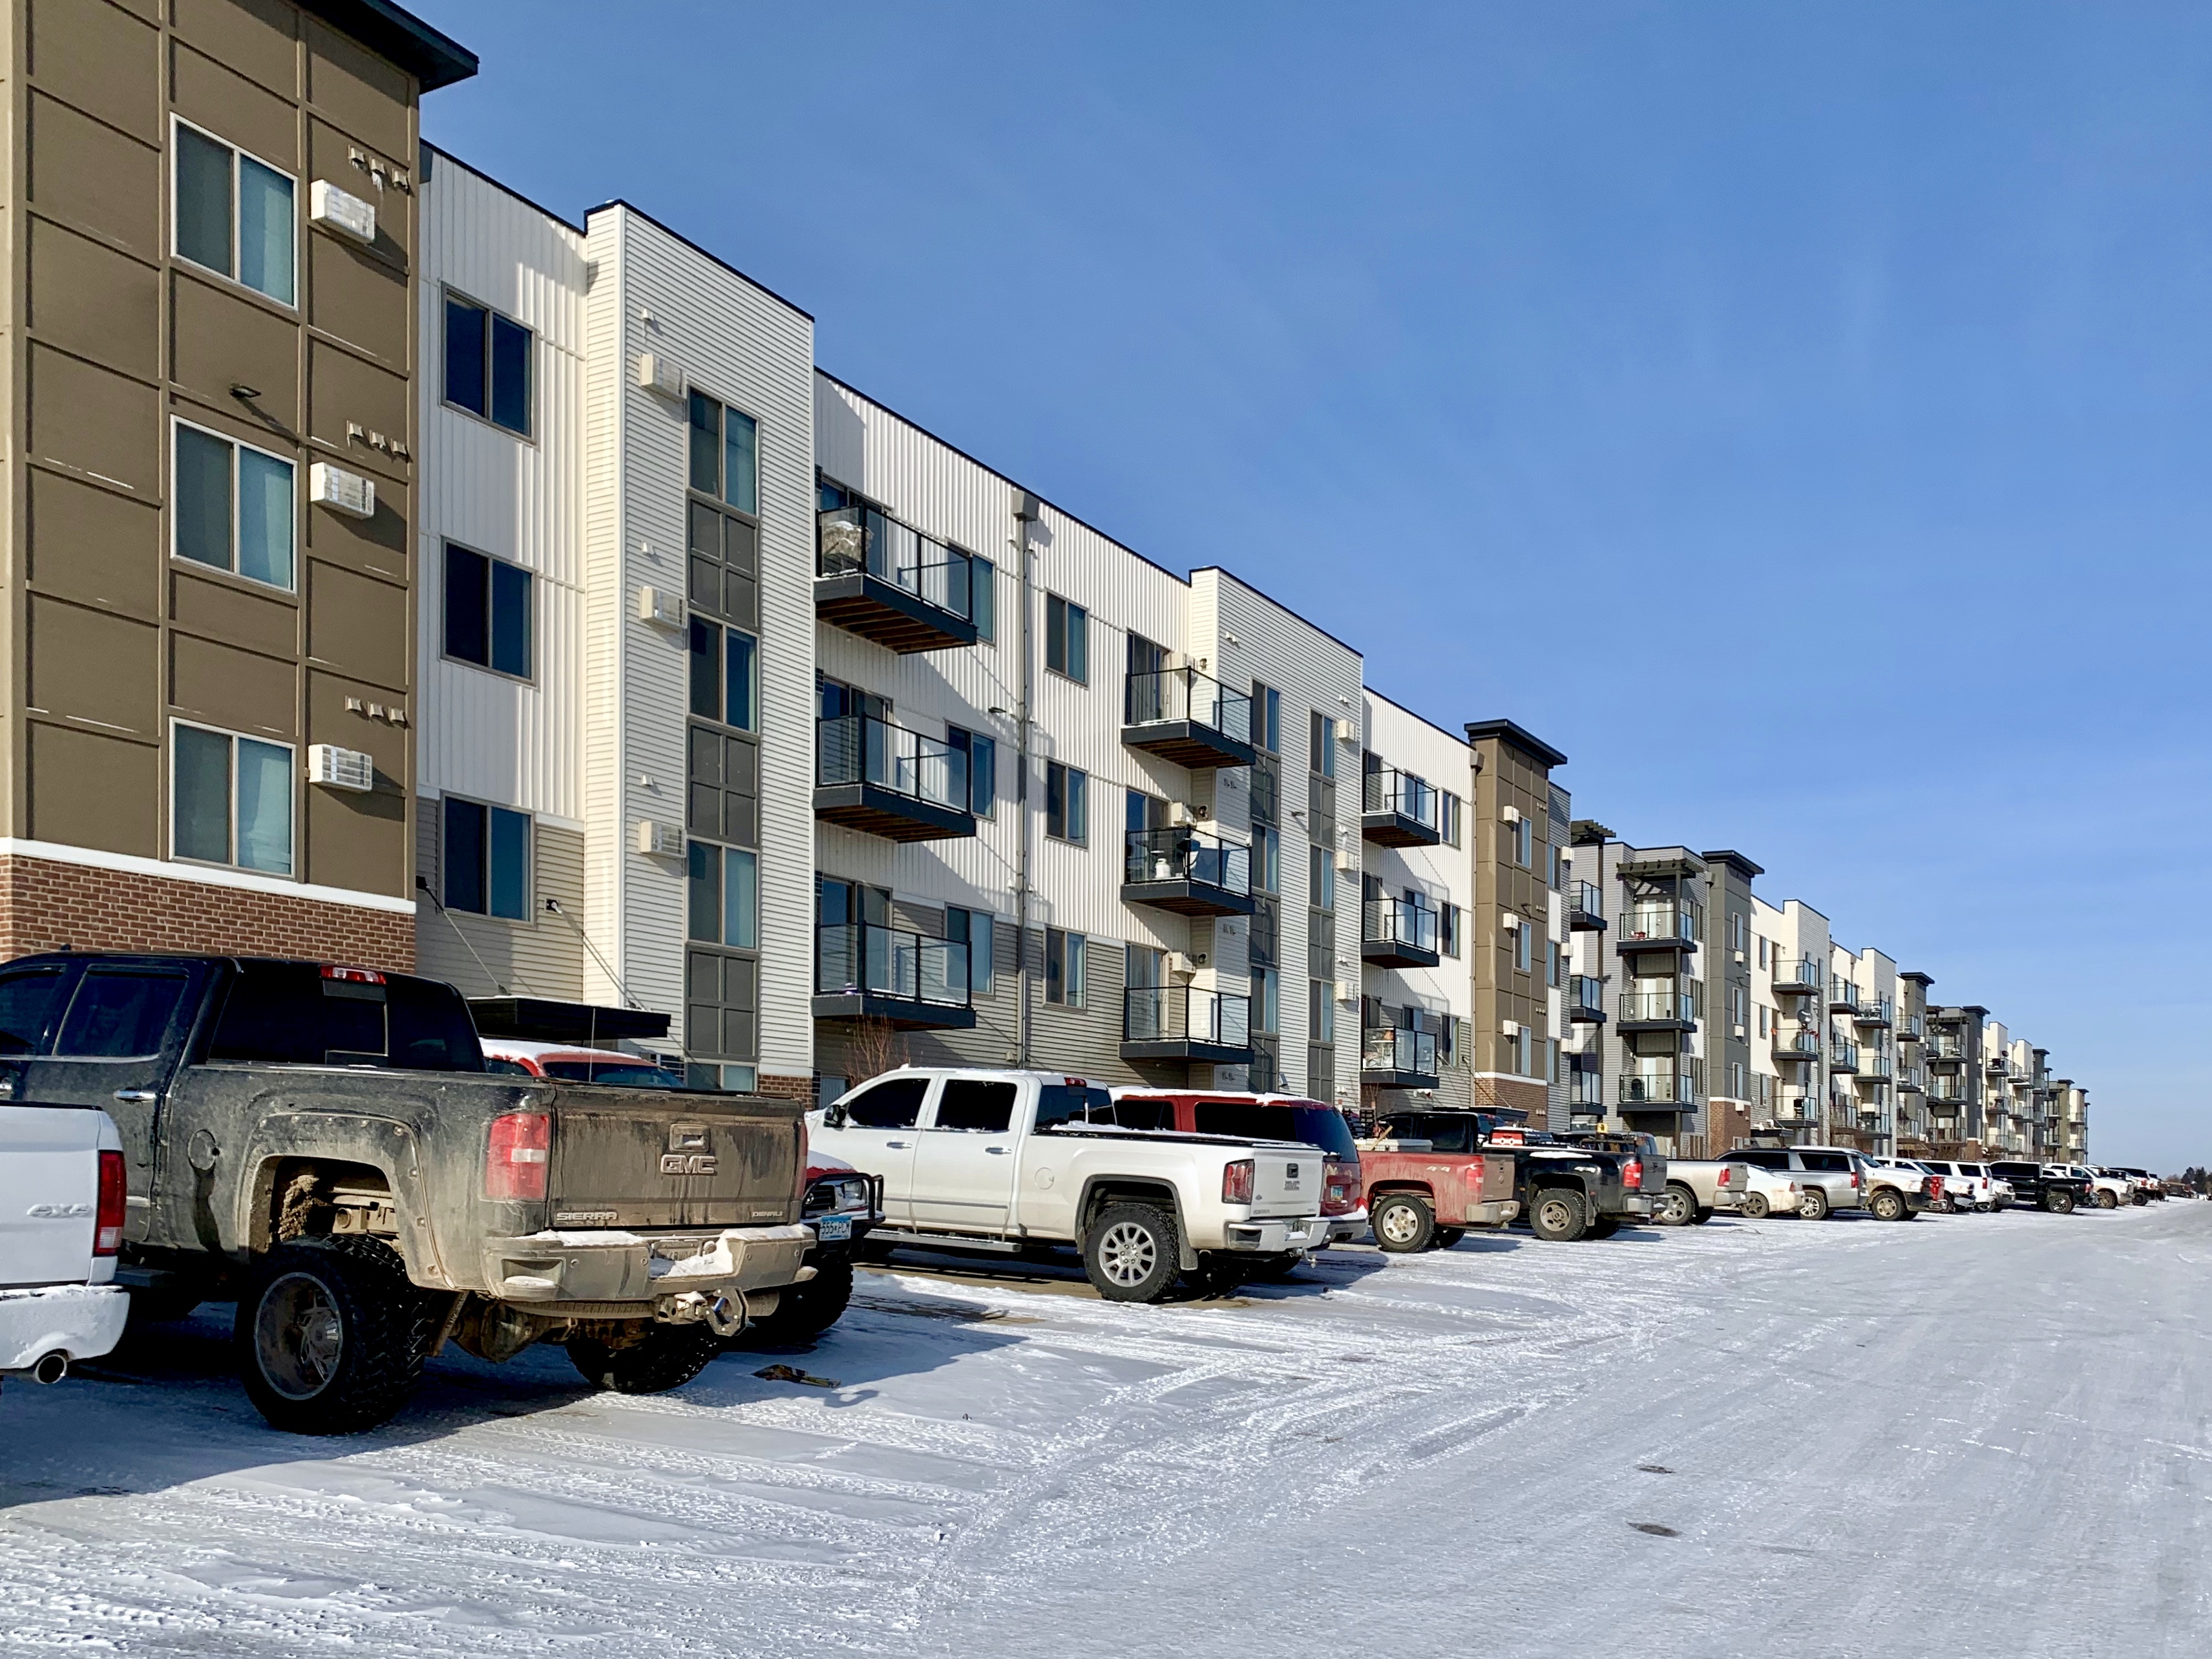 Luxury apartment complexes in Watford City, North Dakota